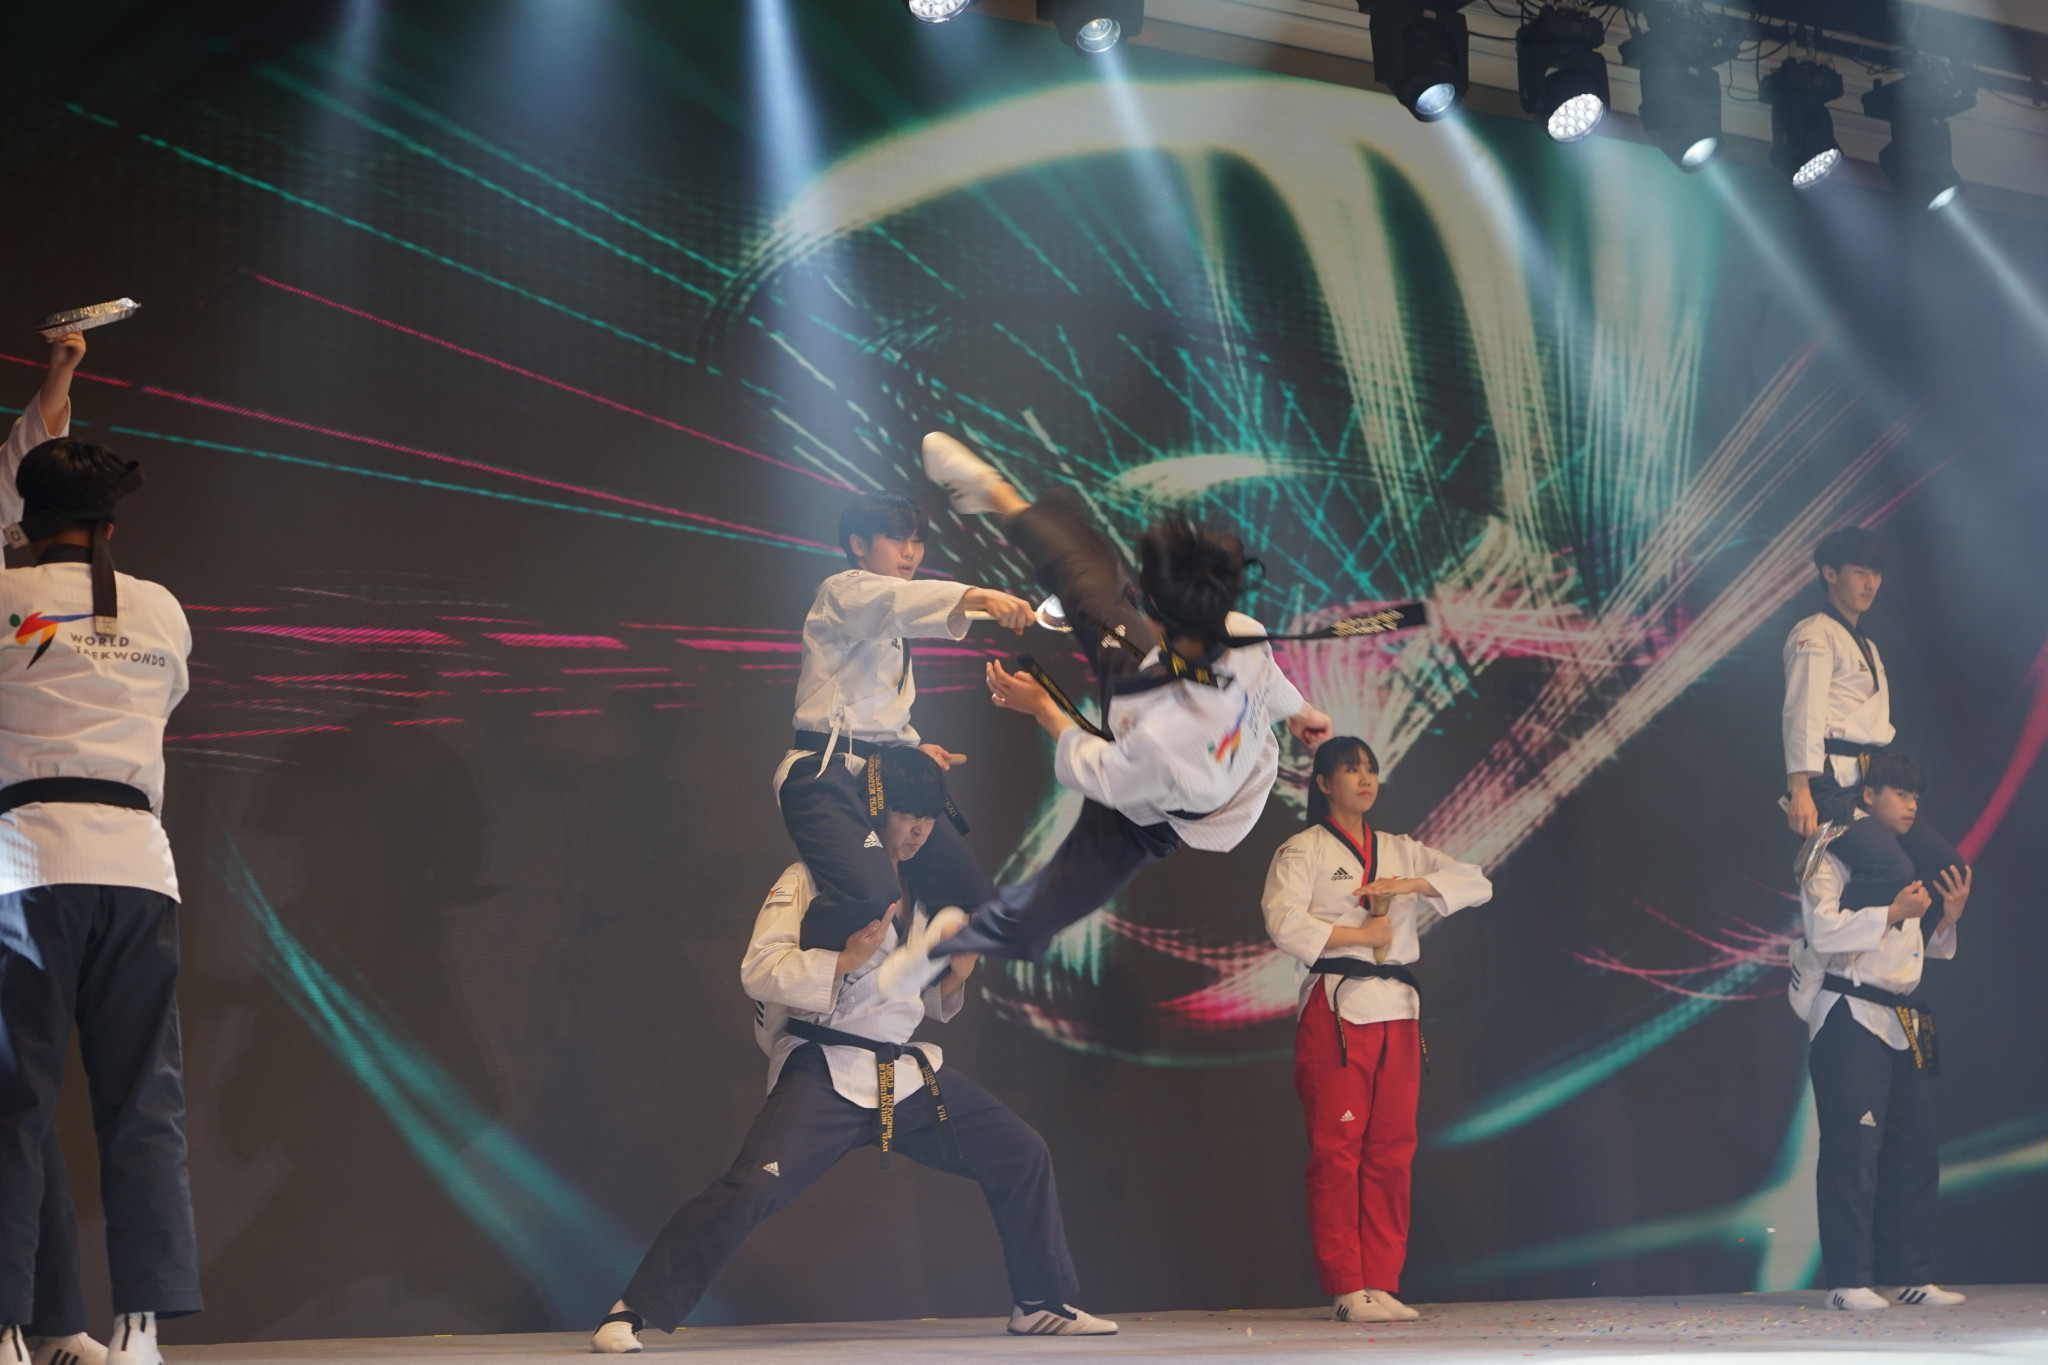 World Taekwondo's demonstration team performed at the AIPS Awards ©World Taekwondo